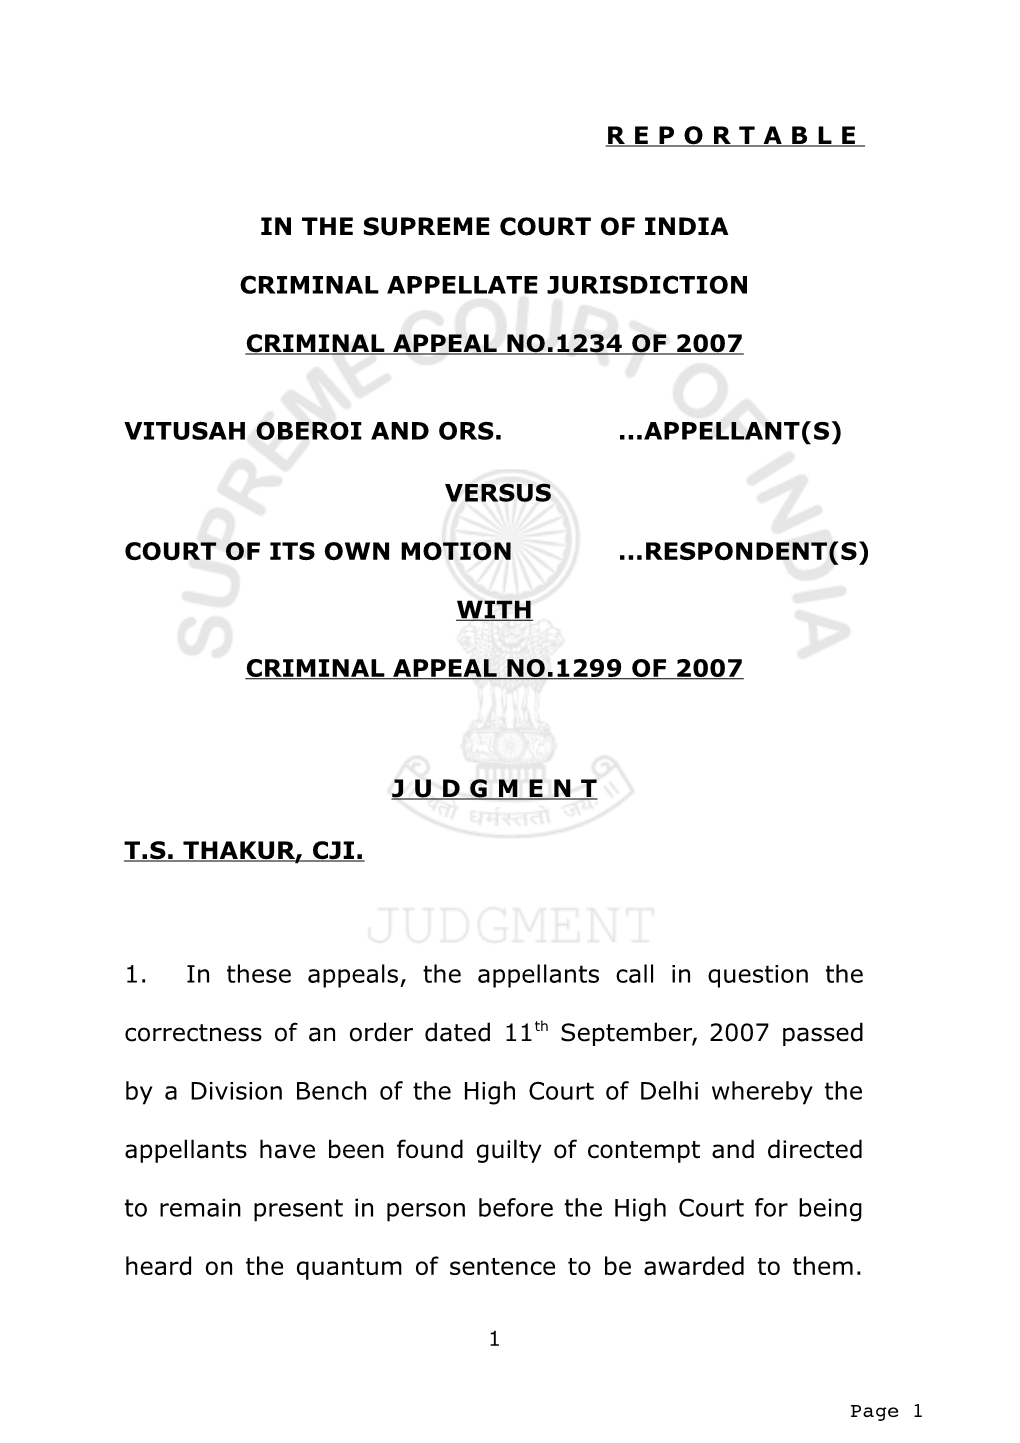 R E P O R T a B L E in the Supreme Court of India Criminal Appellate Jurisdiction Criminal Appeal No.1234 of 2007 Vitusah Oberoi